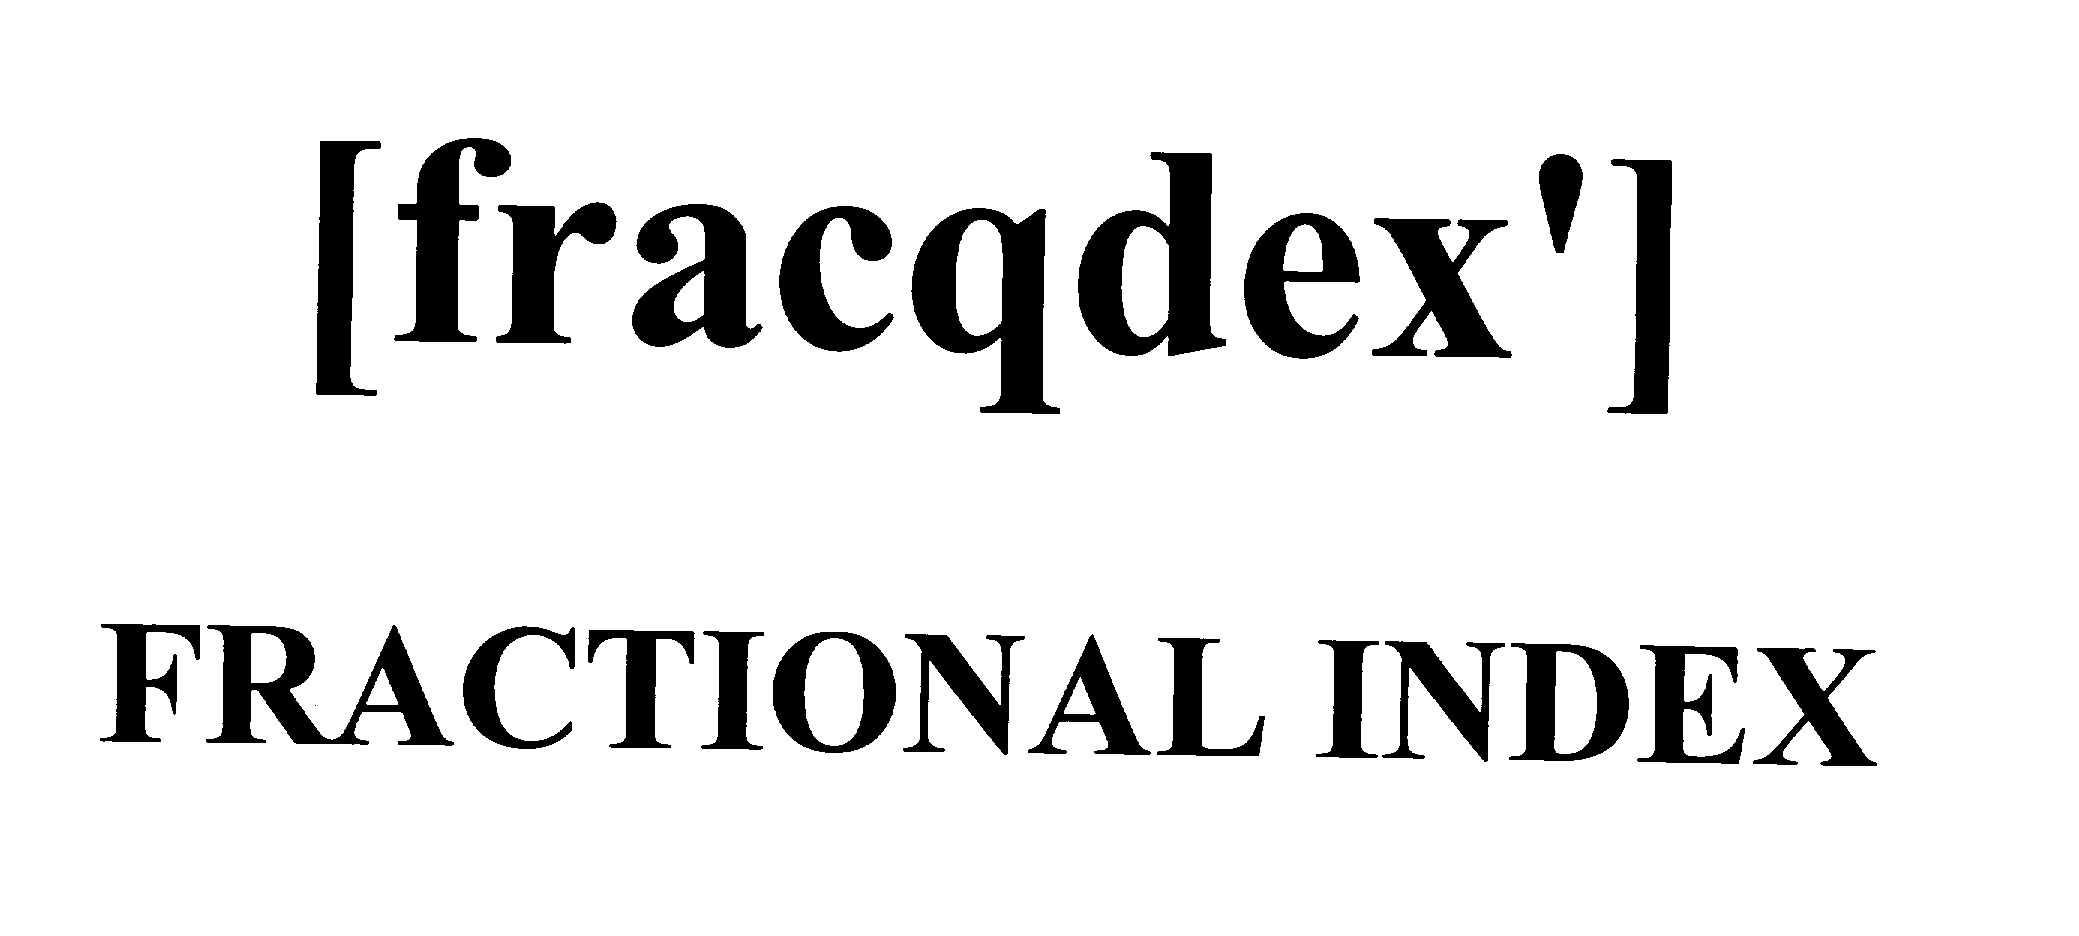  (FRACQDEX') FRACTIONAL INDEX